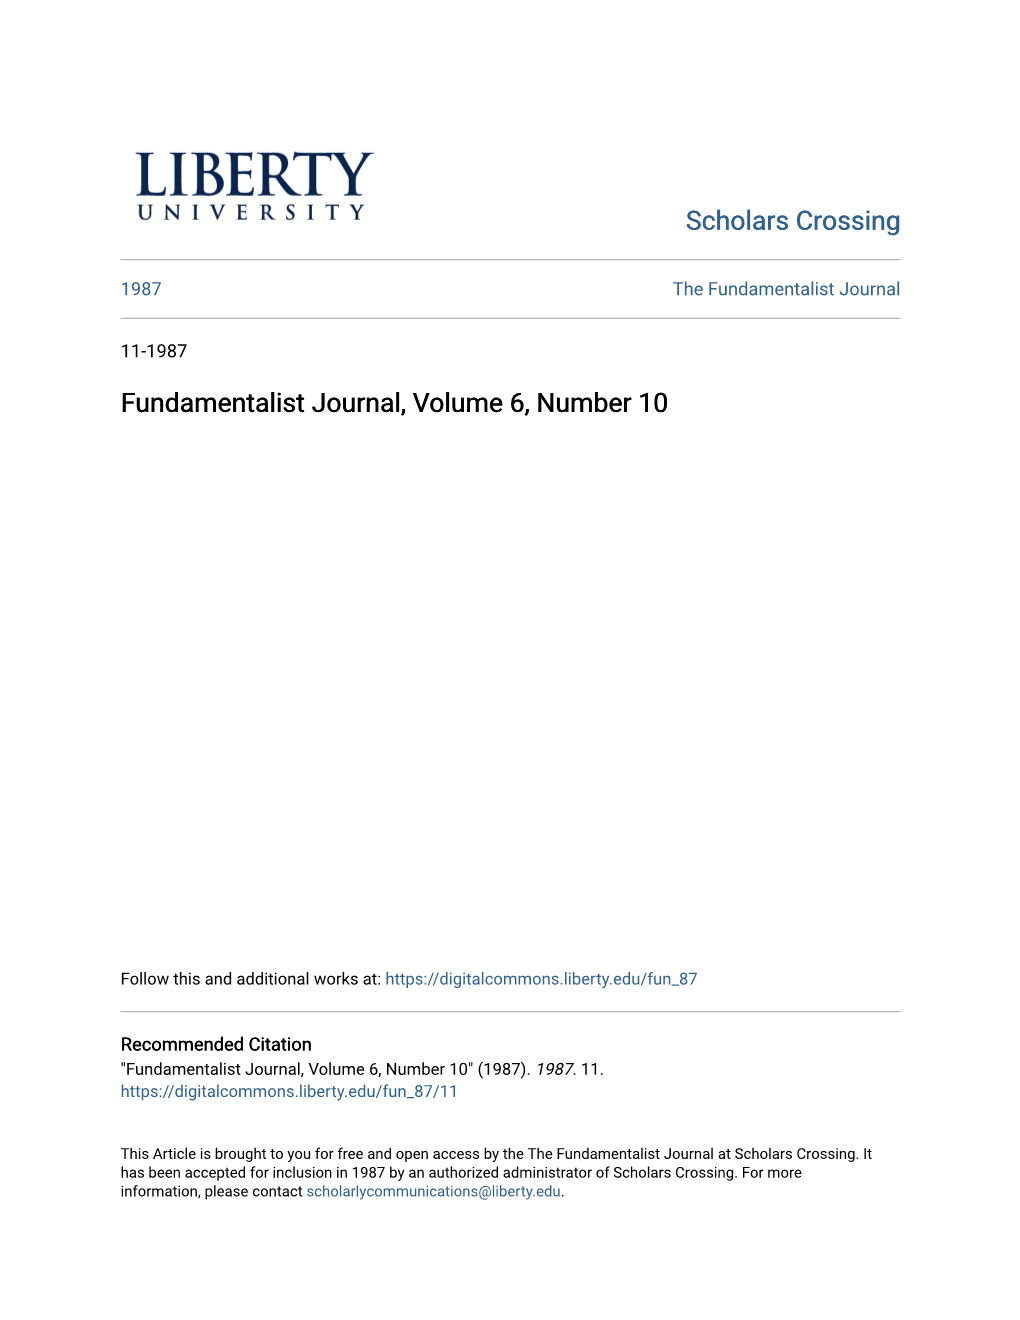 Fundamentalist Journal, Volume 6, Number 10